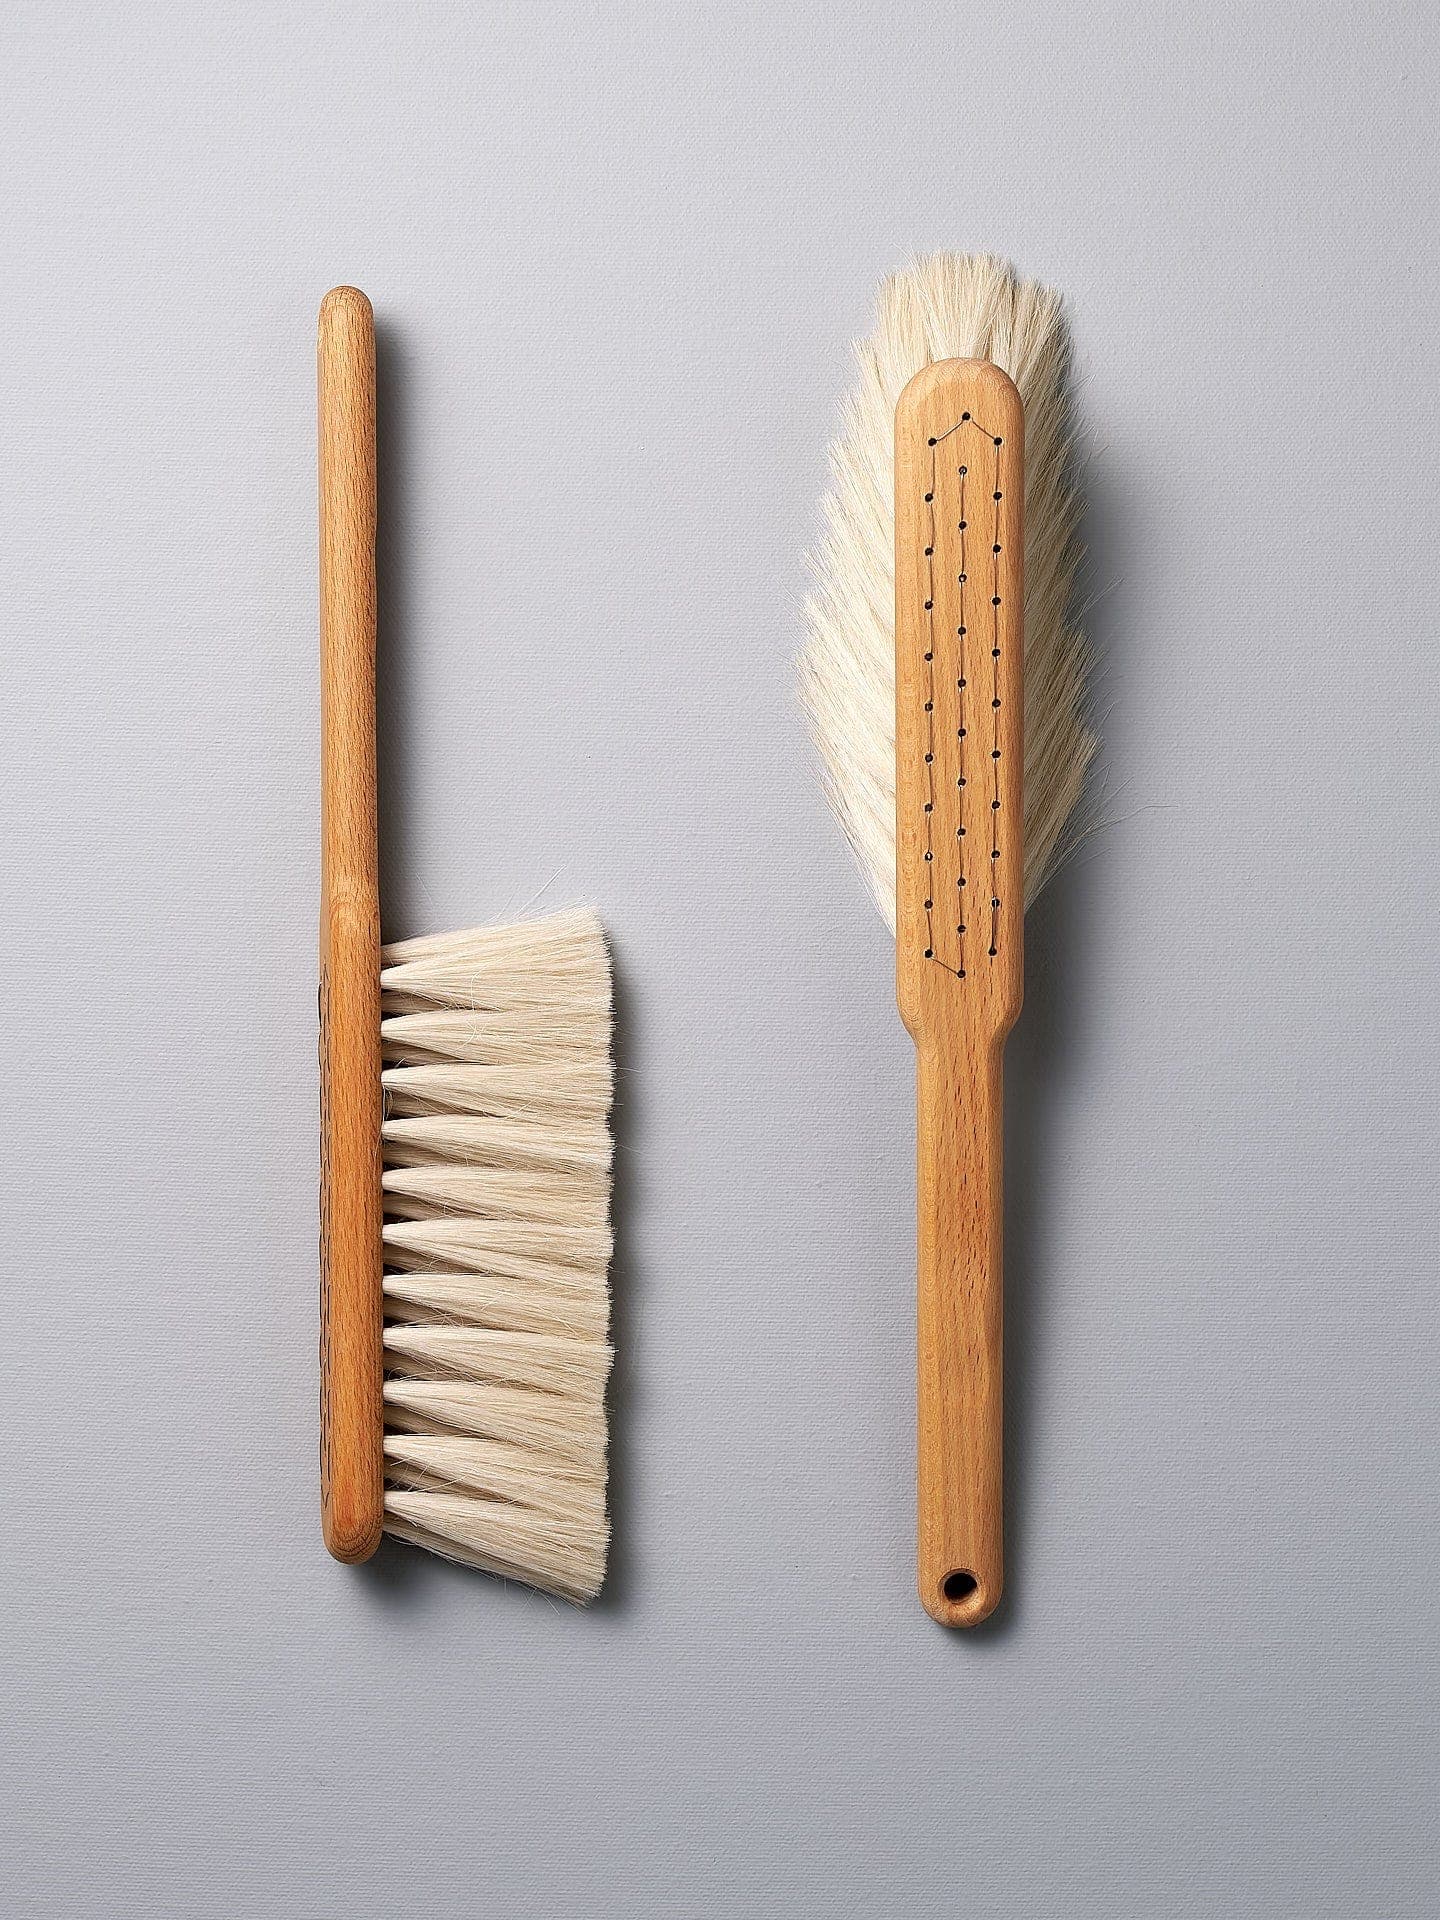 Two Dust Brushes - Beechwood & Goat Hair by Iris Hantverk on a grey surface.